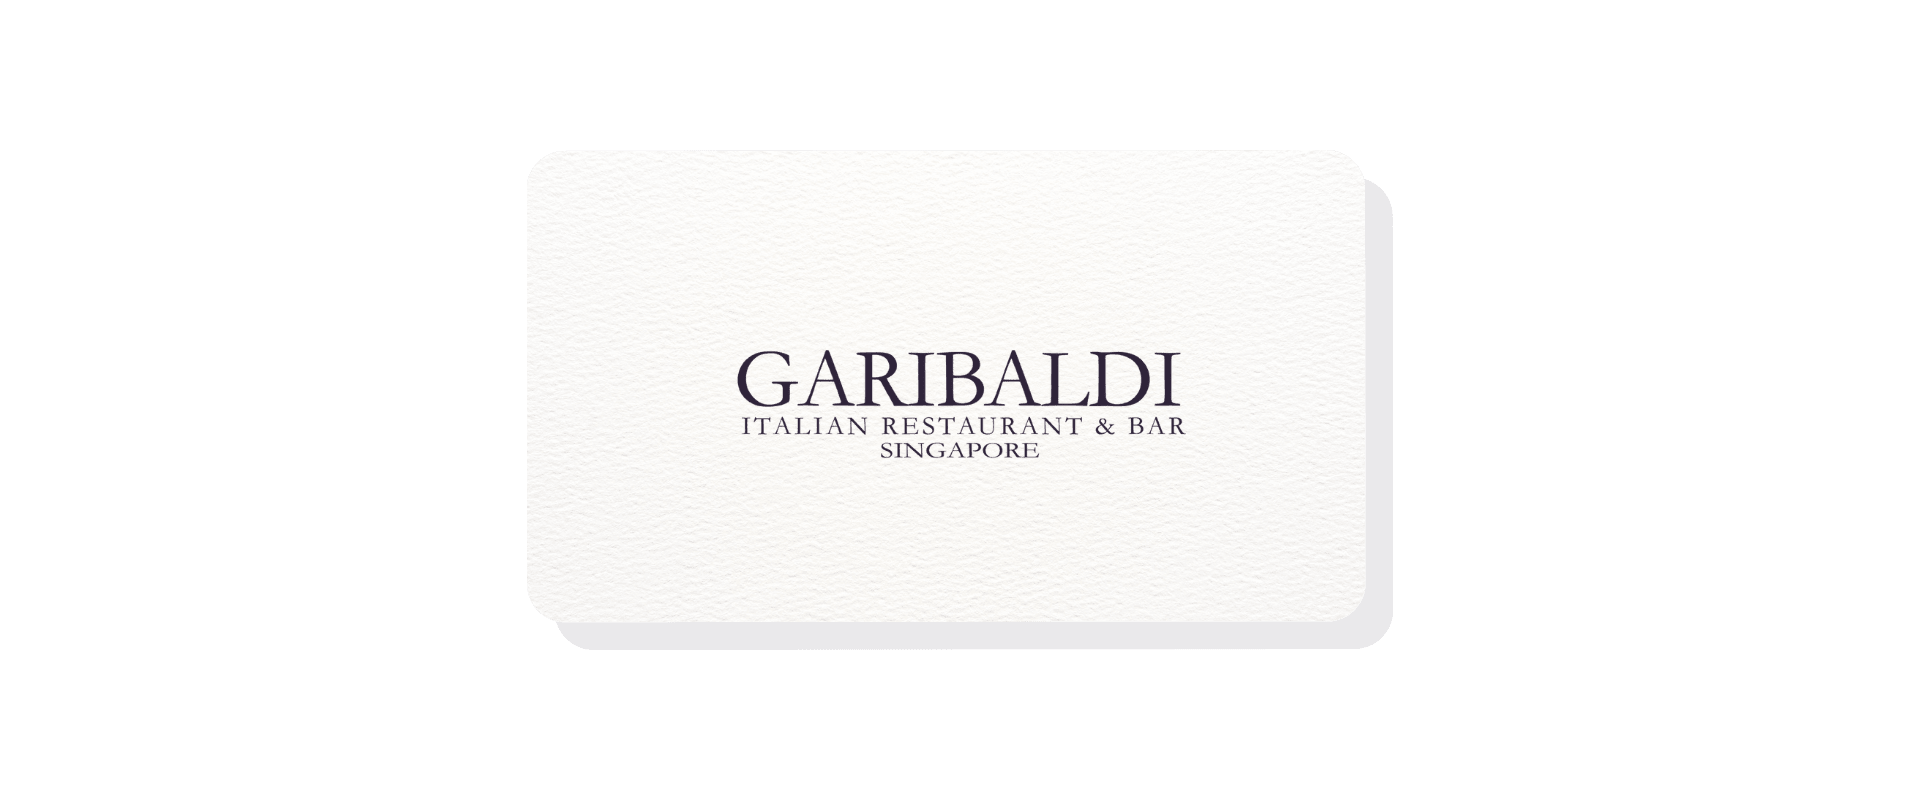 Garibaldi gift card and gift voucher for Italian cuisine